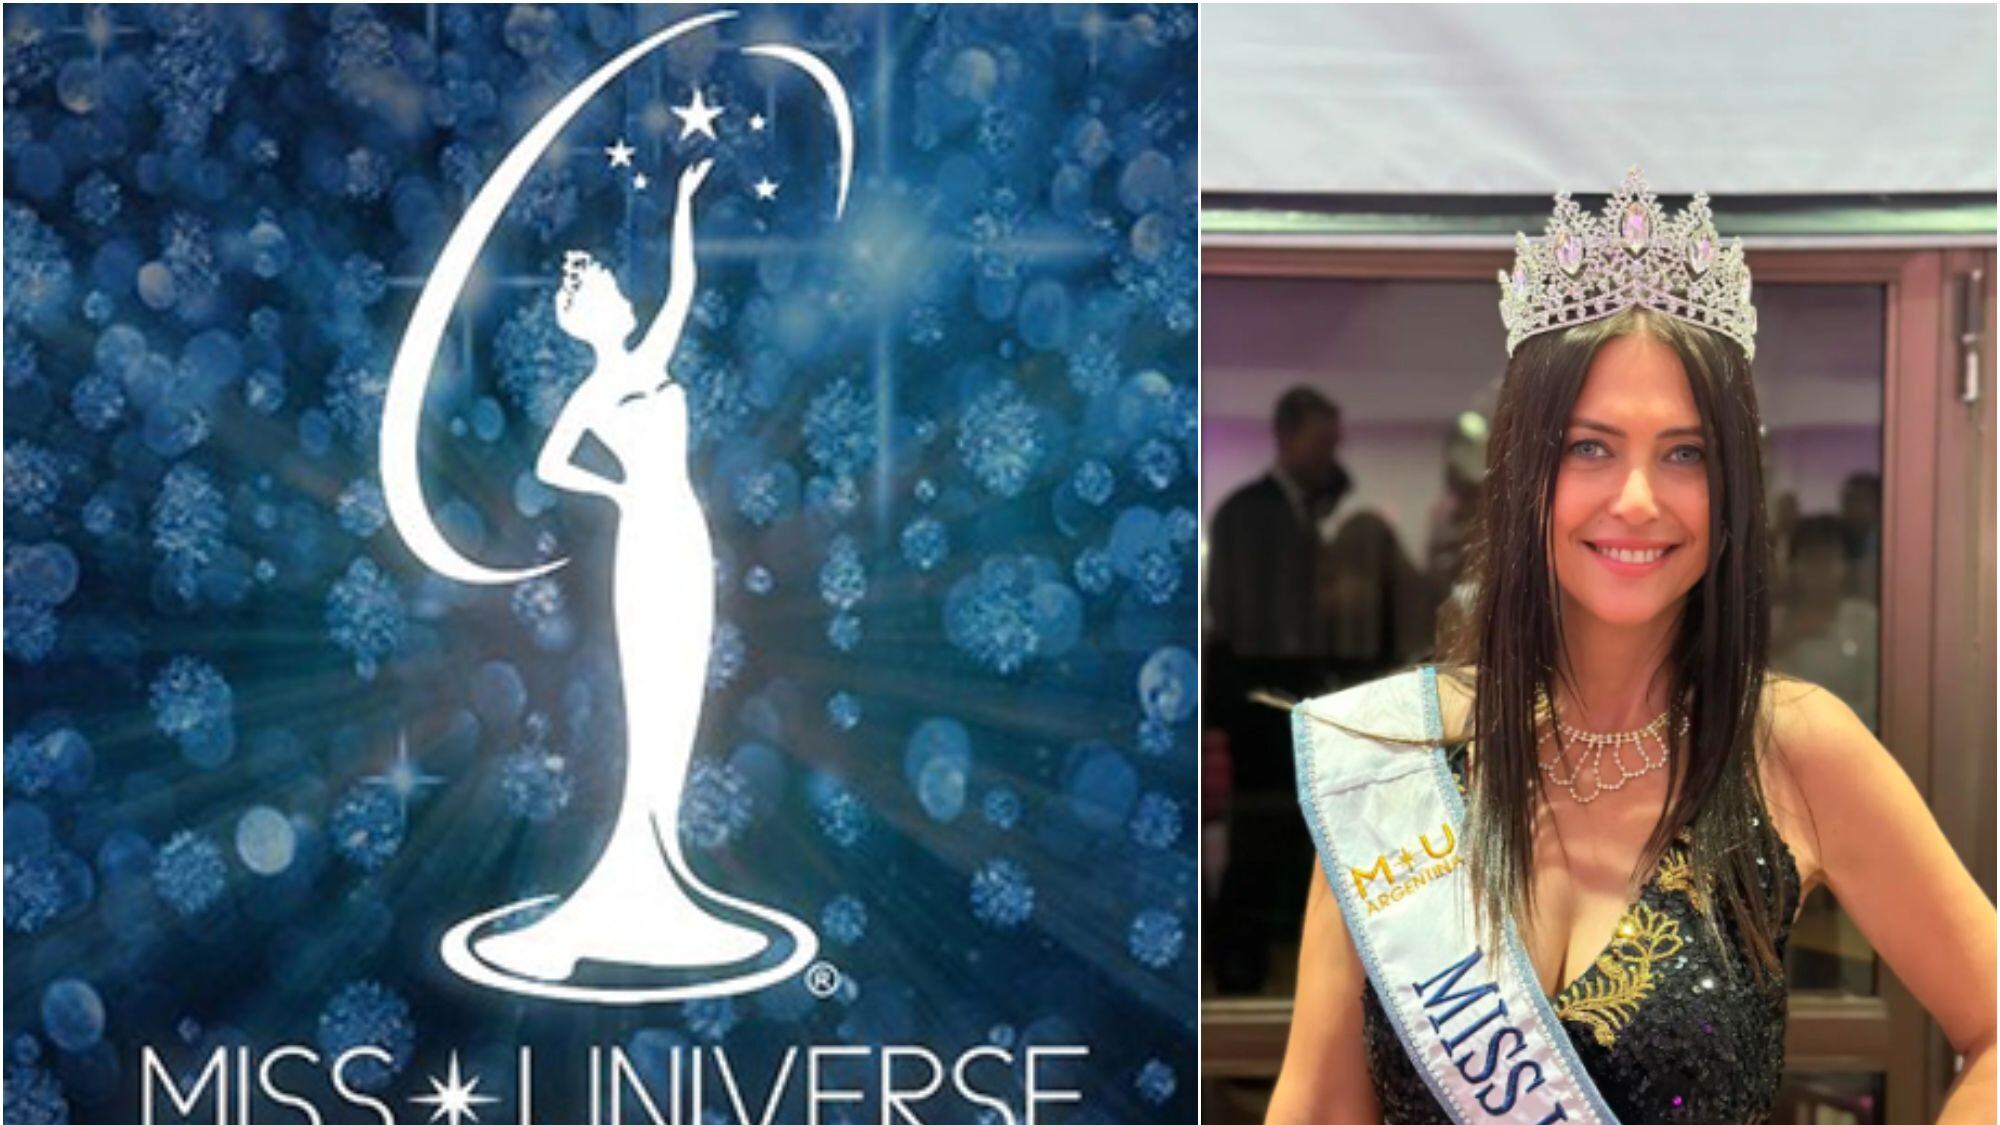 Miss Universo